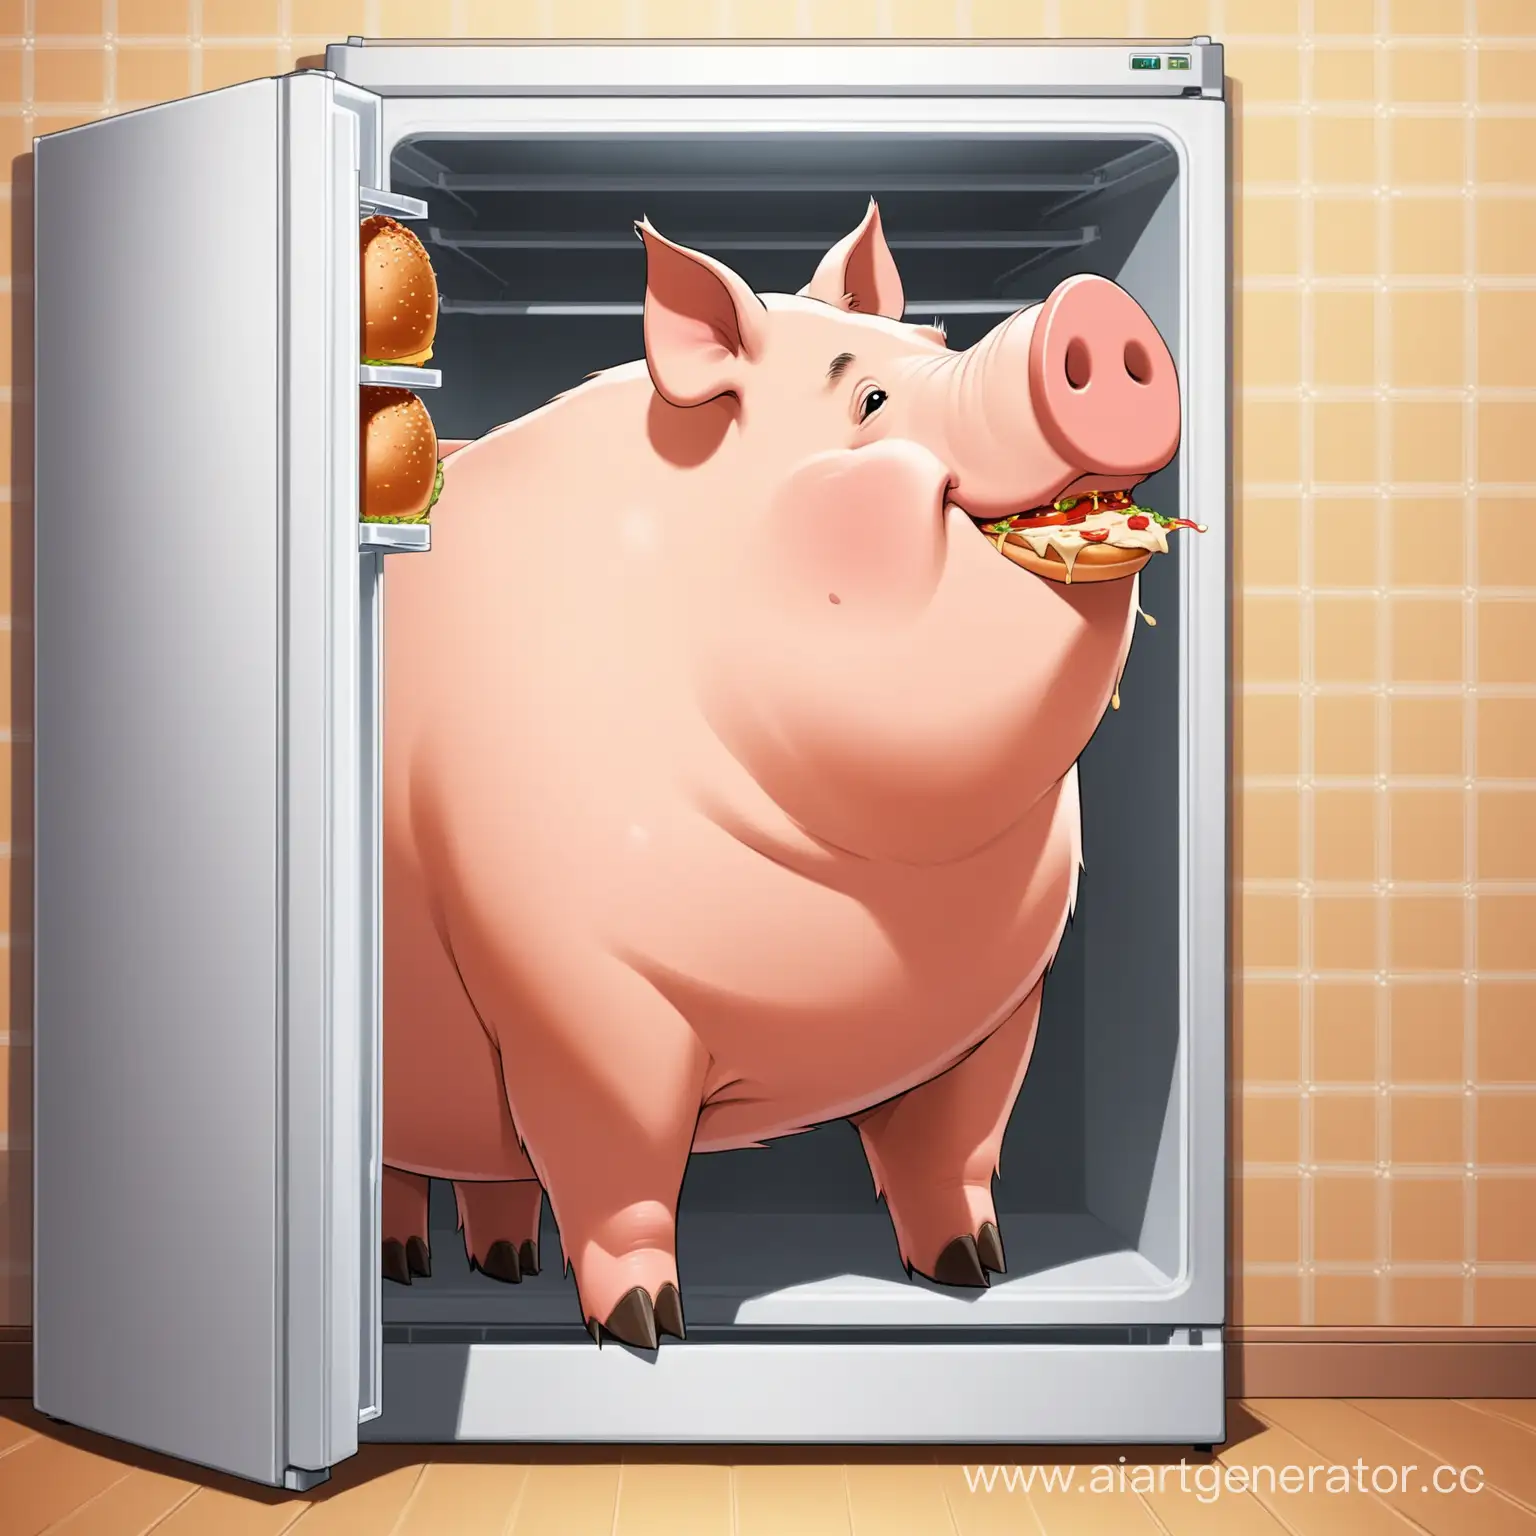 Hungry-Pig-Kostya-Raiding-the-Refrigerator